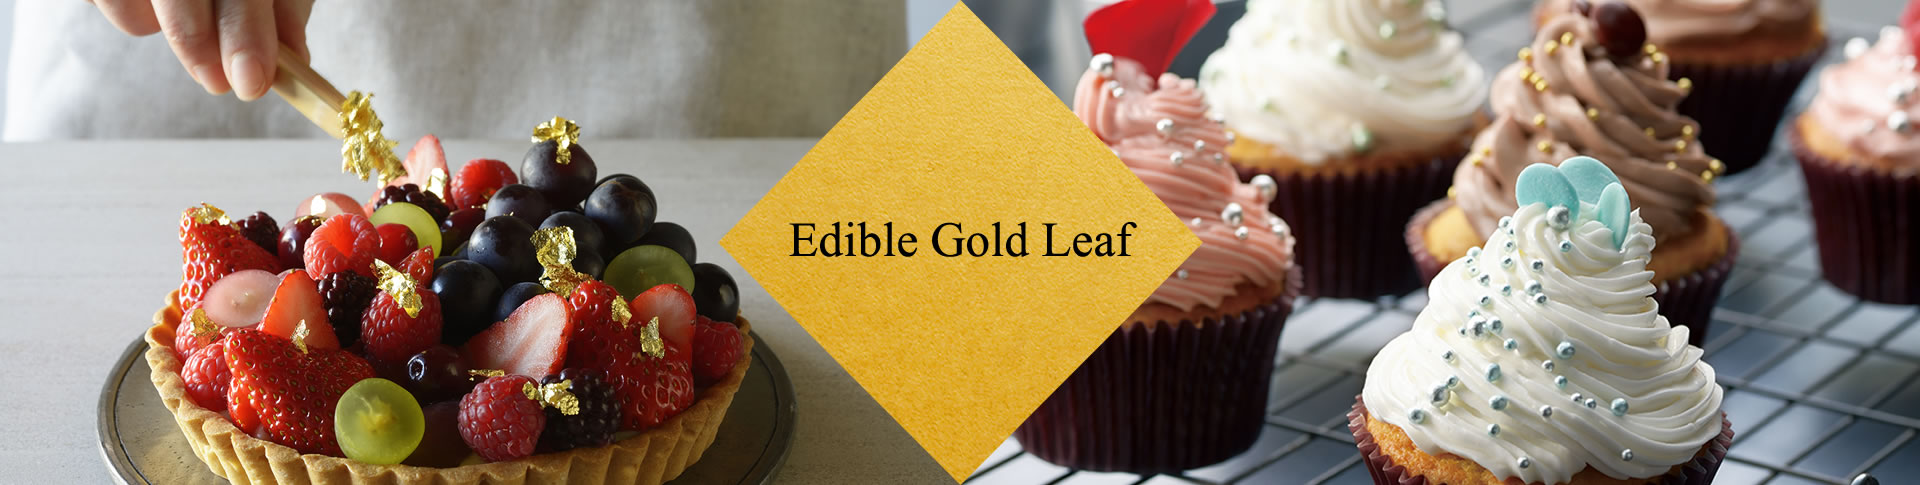 Edible Gold Leaf